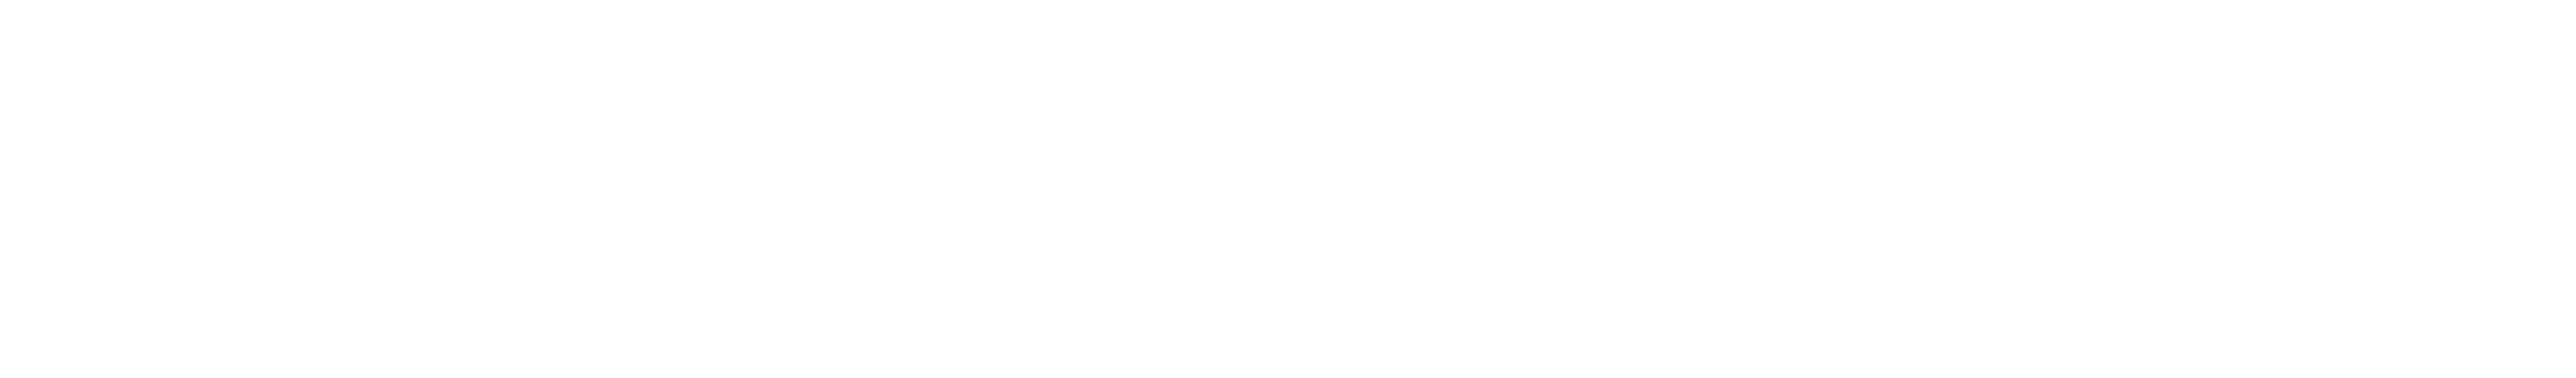 Alice & Jack logo